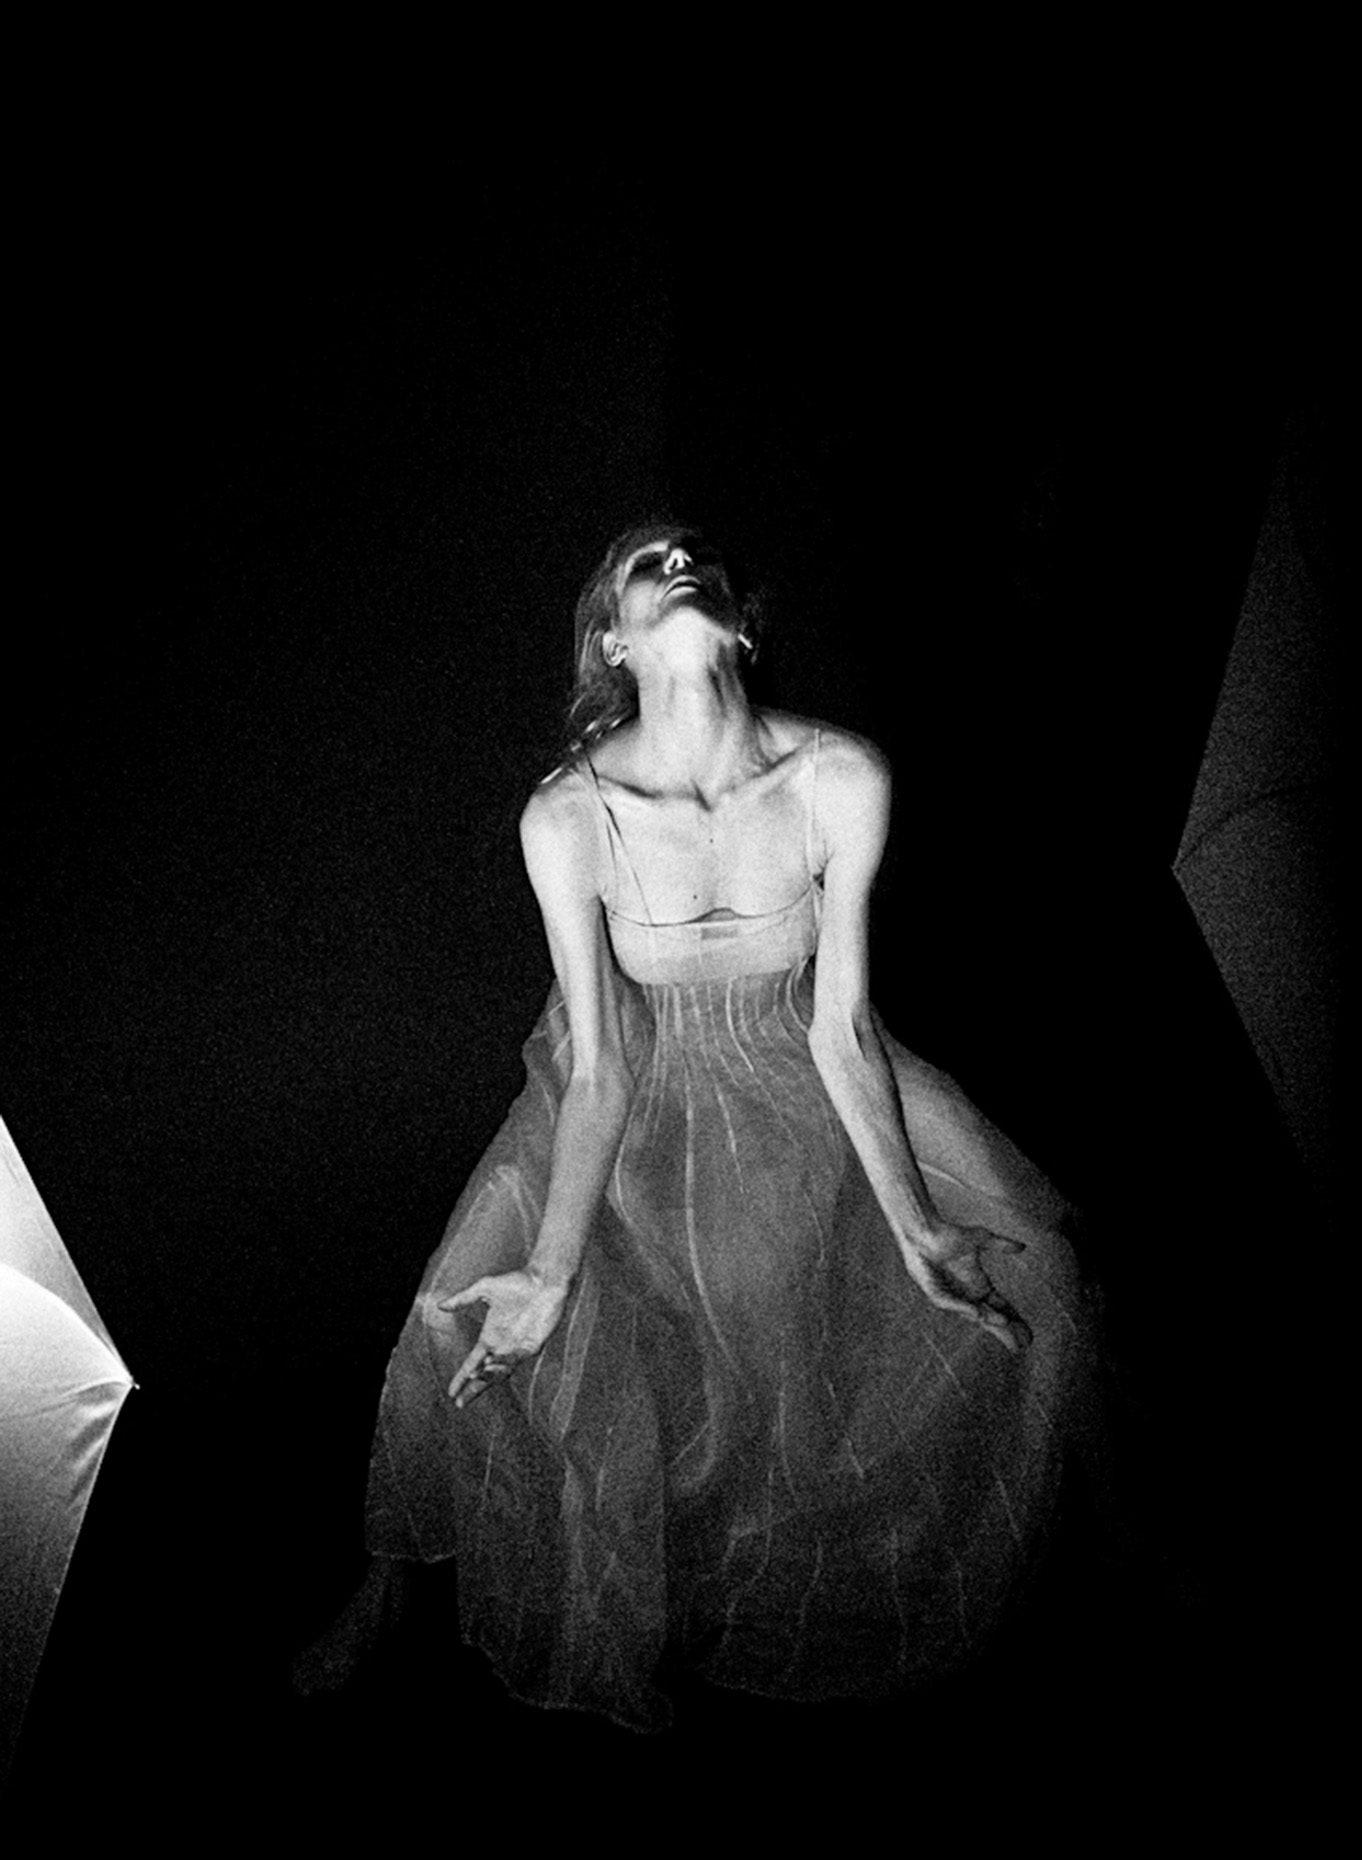 Dance-Photos-Dance-Awake-2-Laria-Saunders.jpg